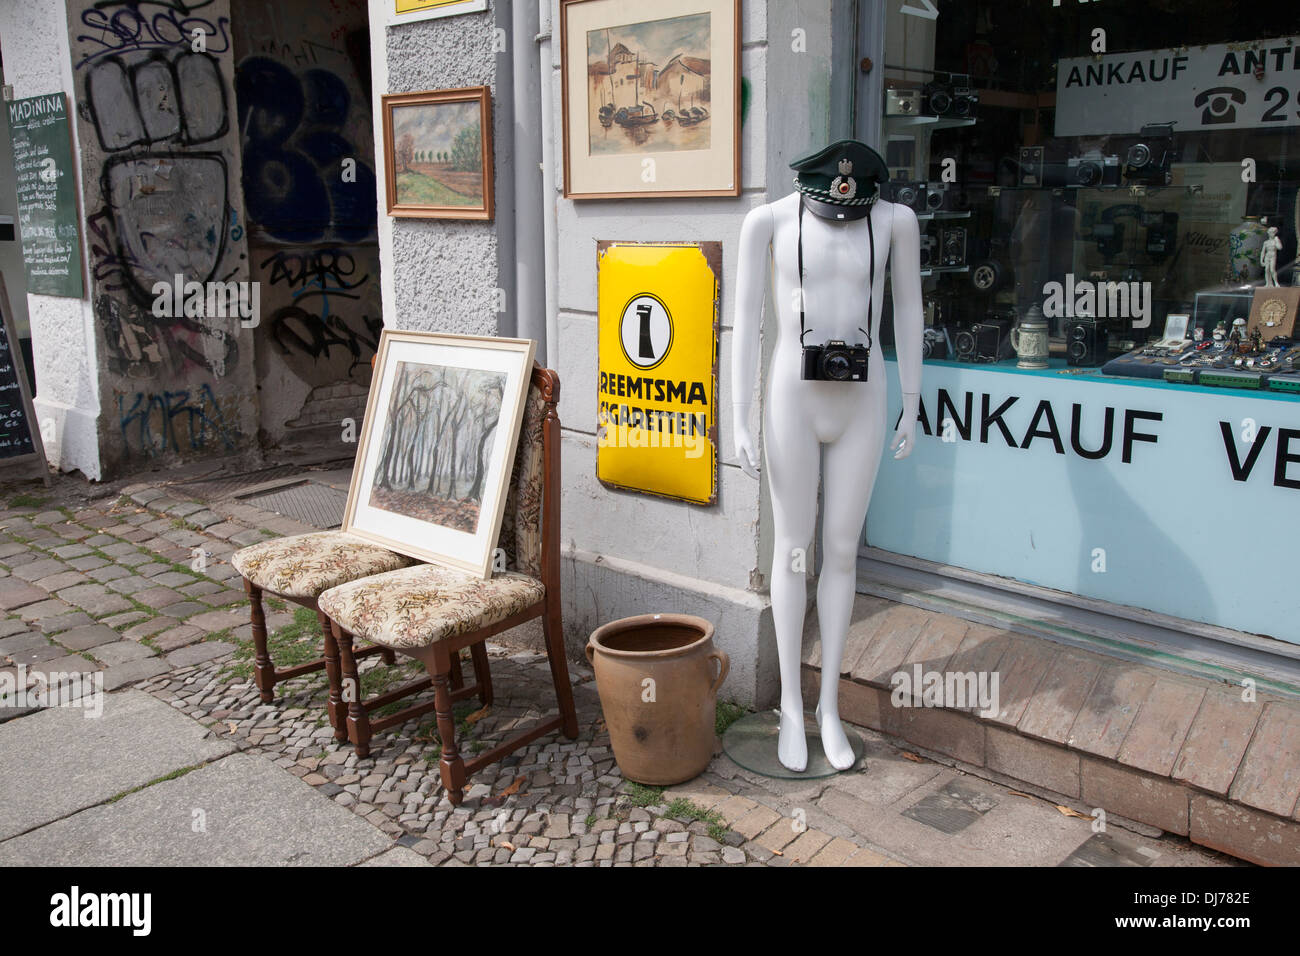 Antik and Trodel Antique Shop in Warschauer Str, Berlin, Germany Stock Photo